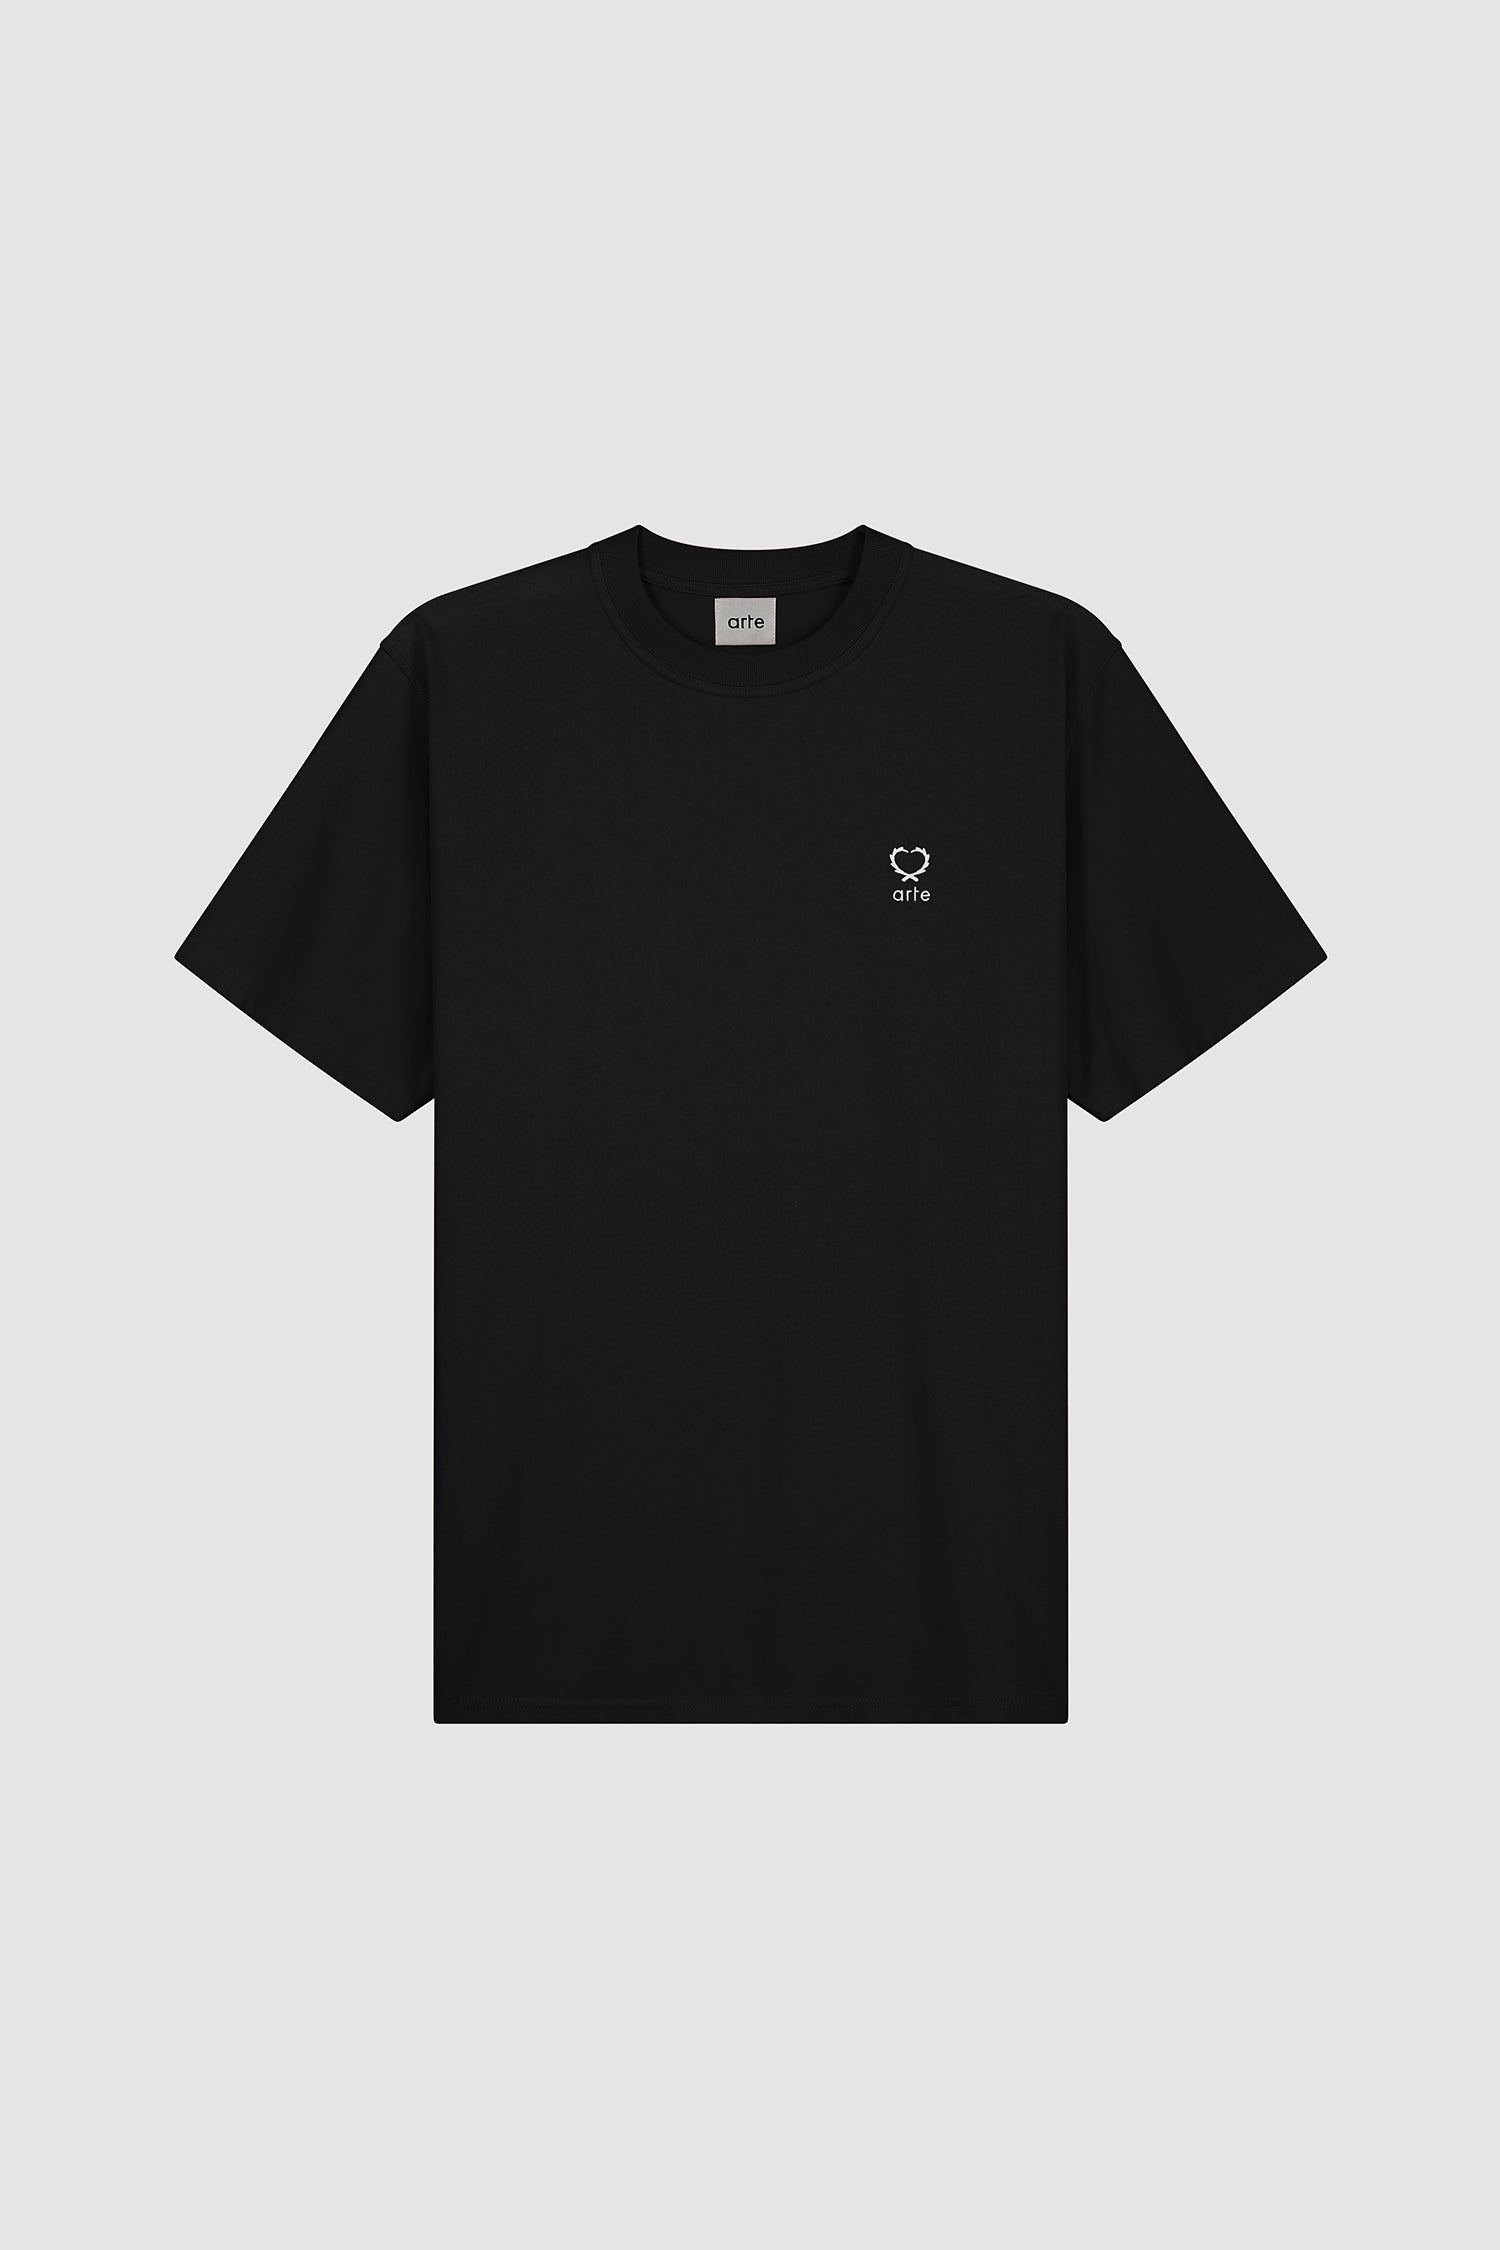 Teo Small Heart T-shirt - Black – Arte Antwerp